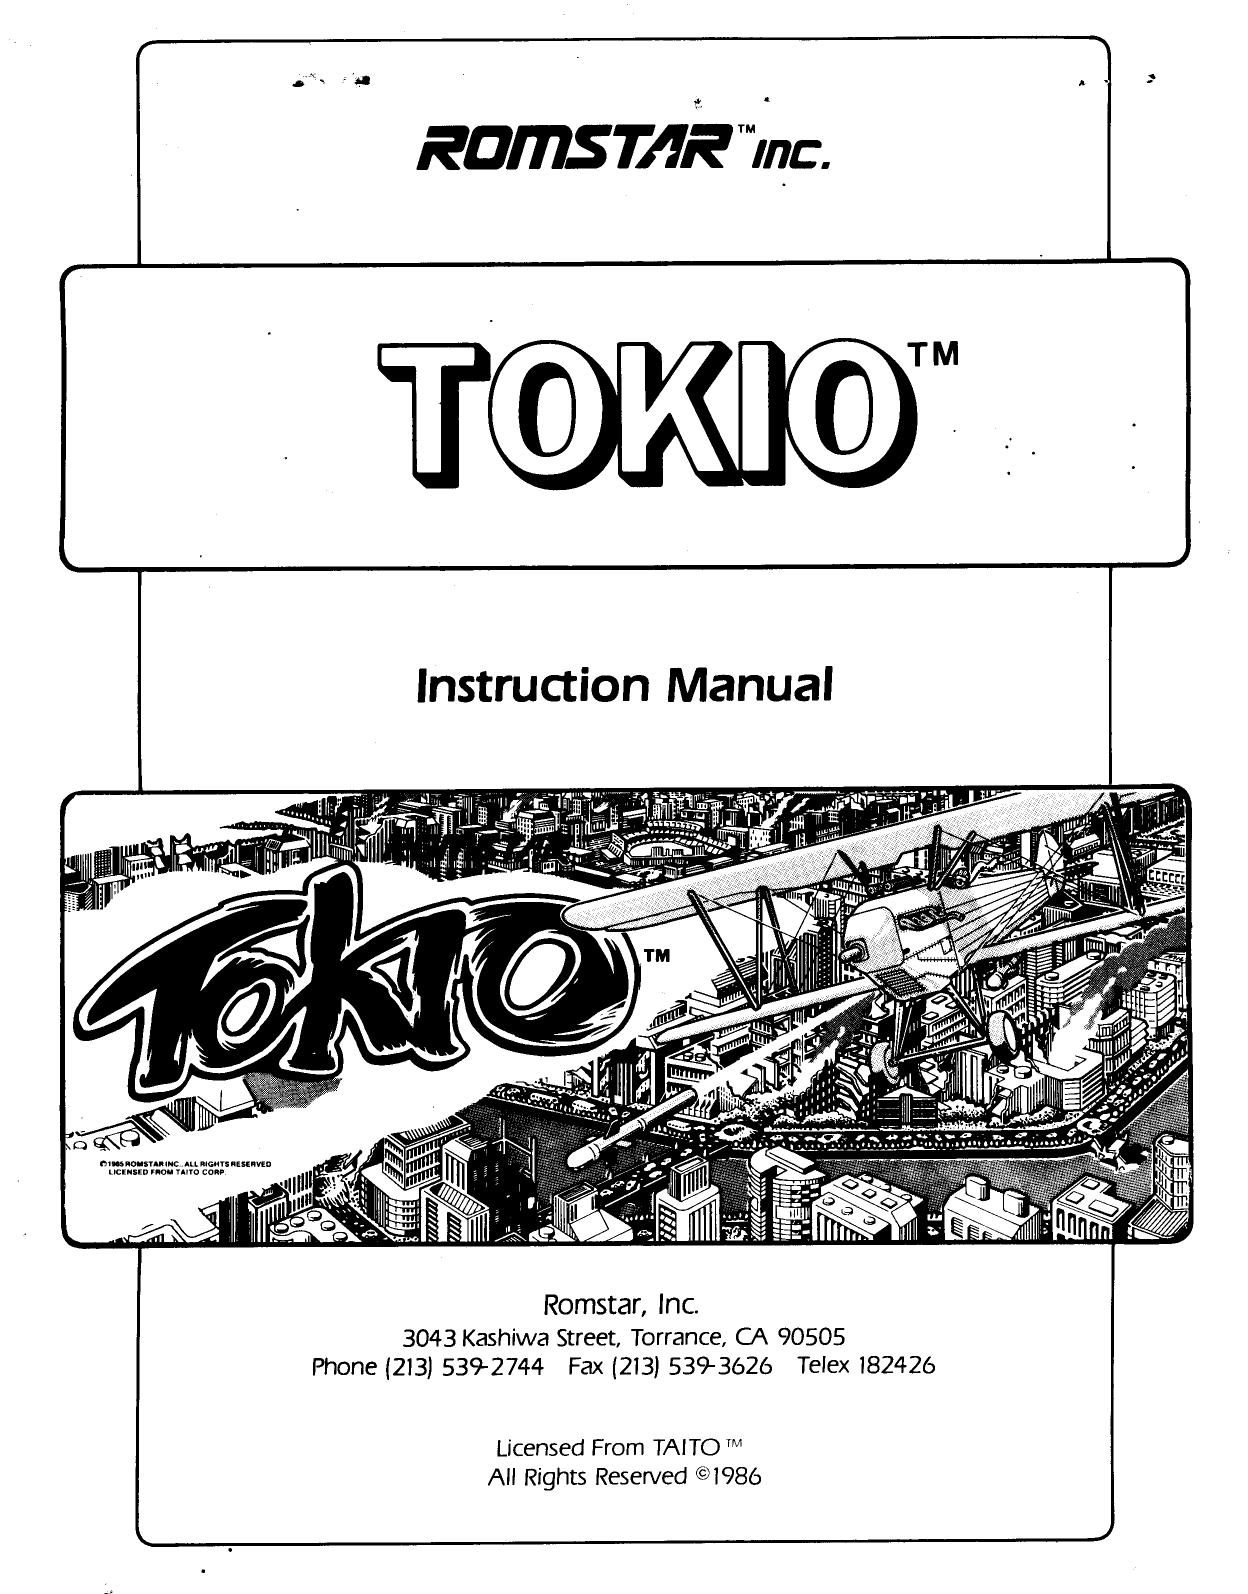 Tokio (Instructions) (U)